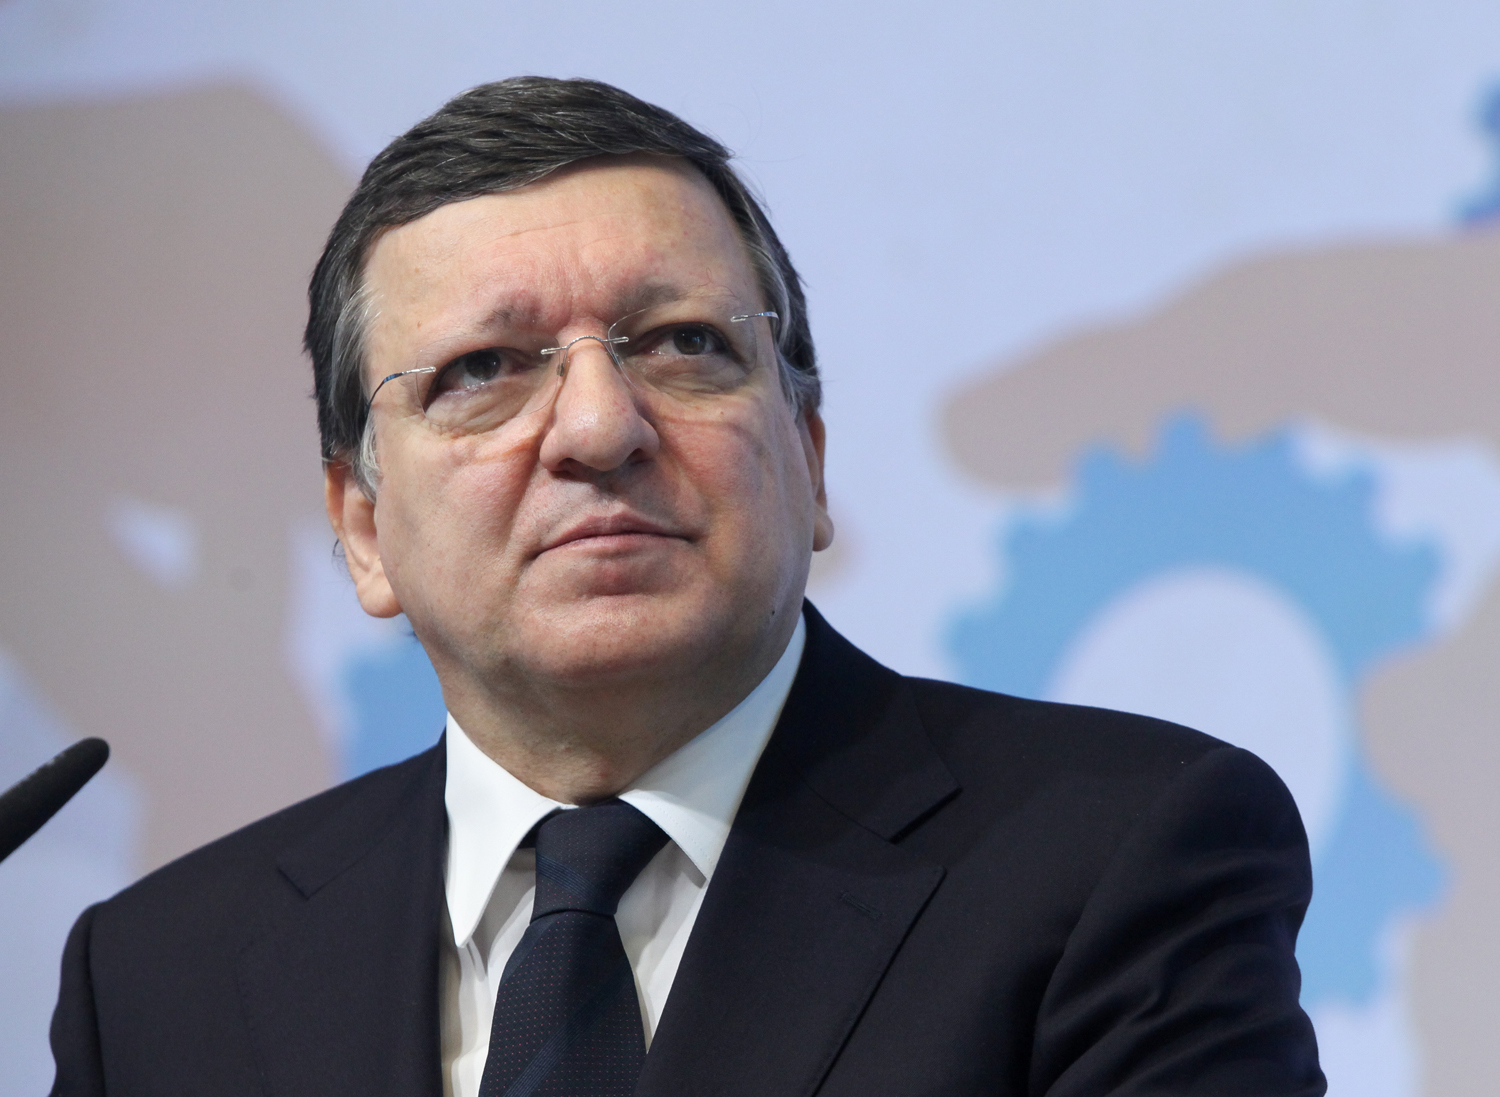 President of the European Commission, Jose Manuel Barroso